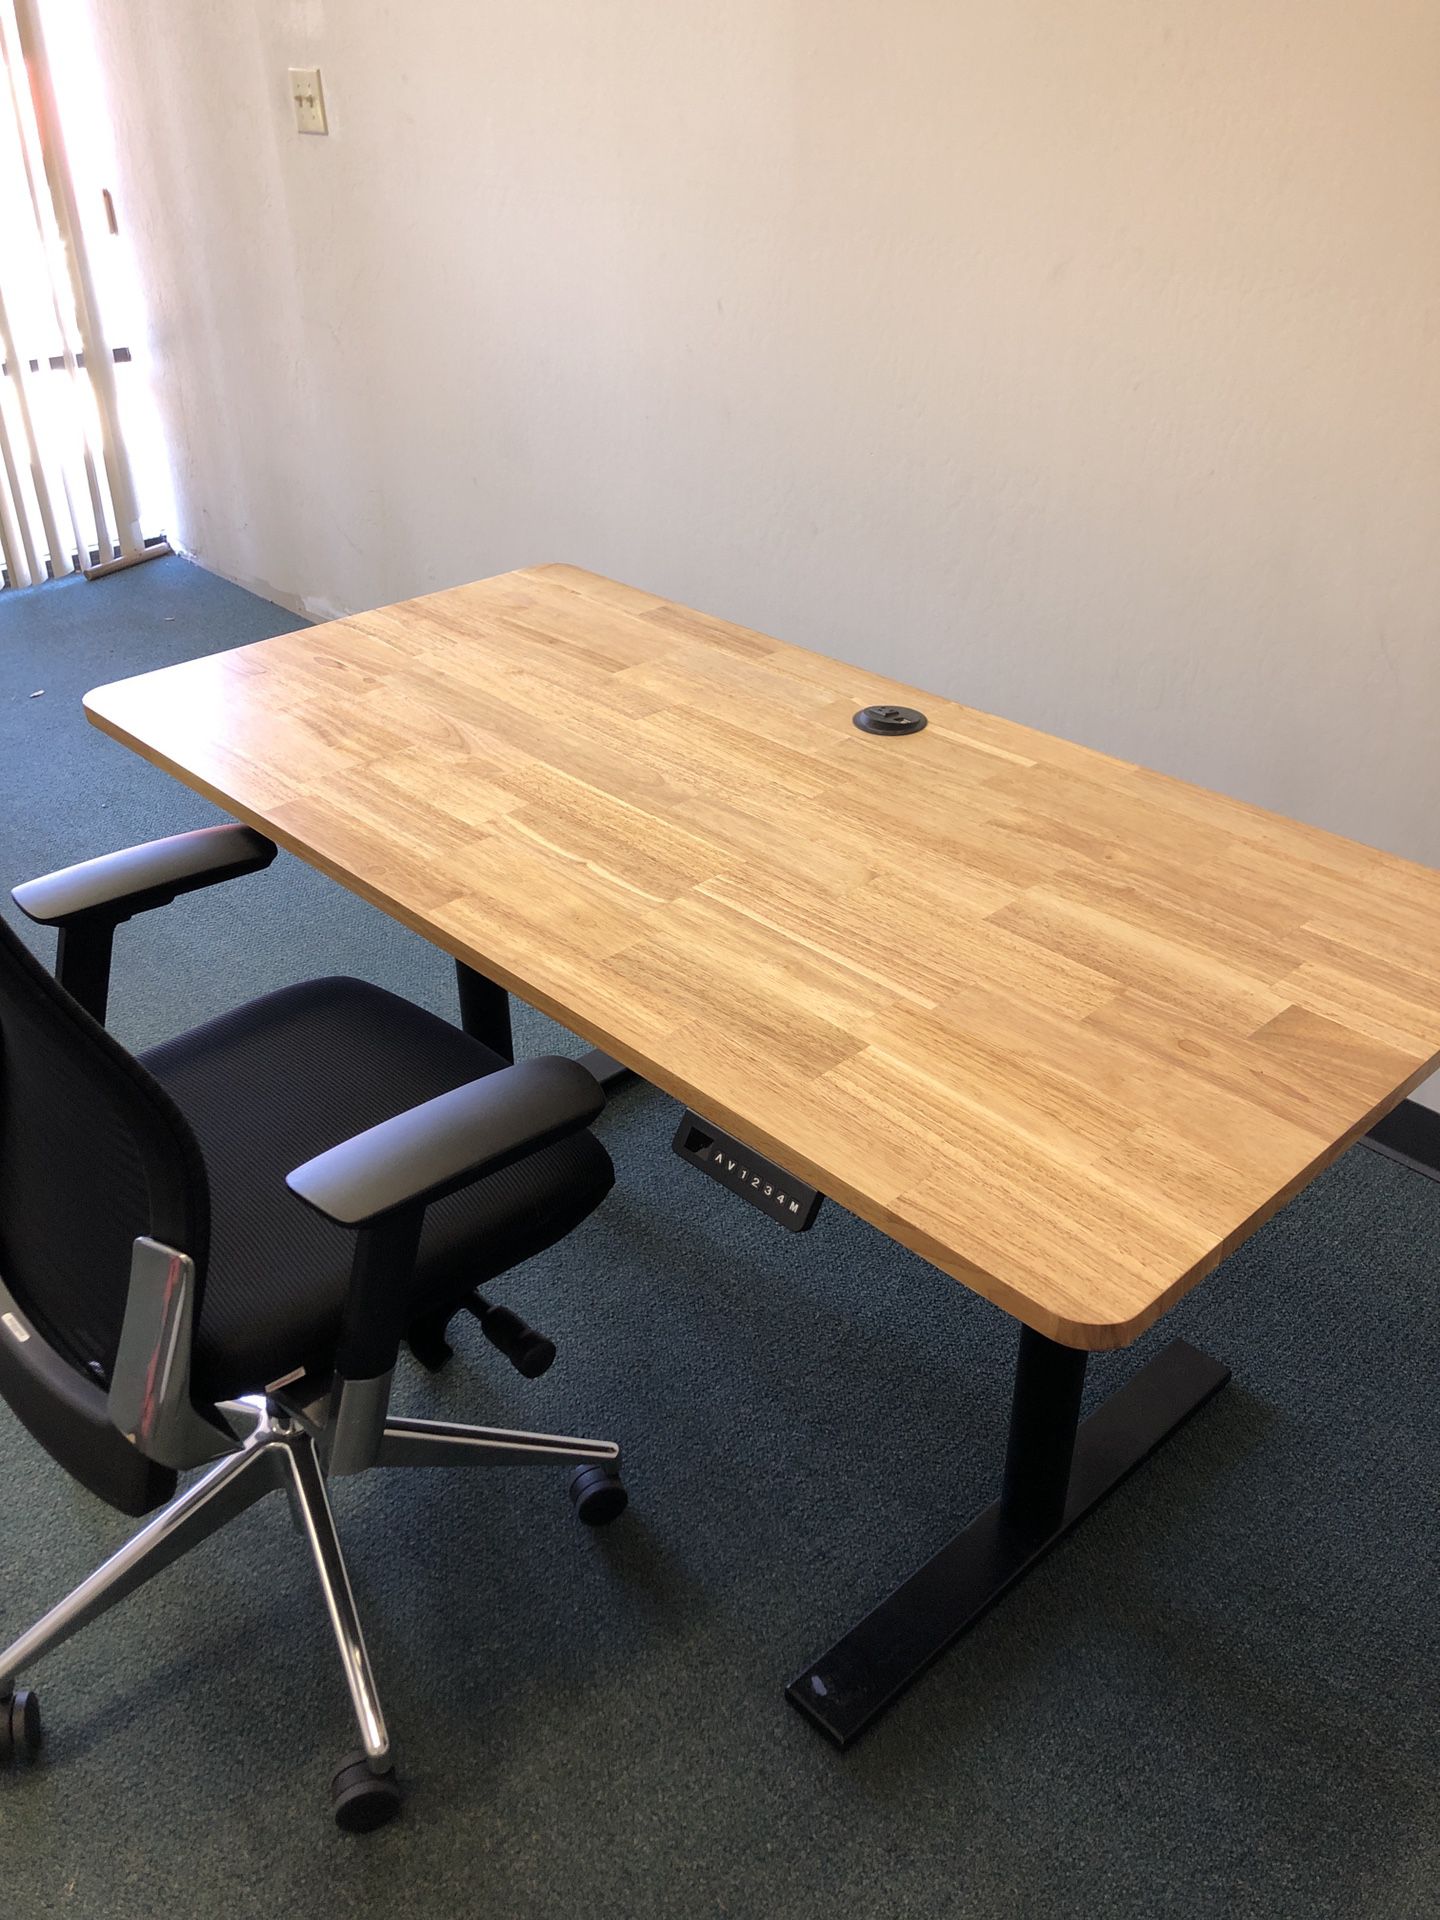 Desk - height adjustable table